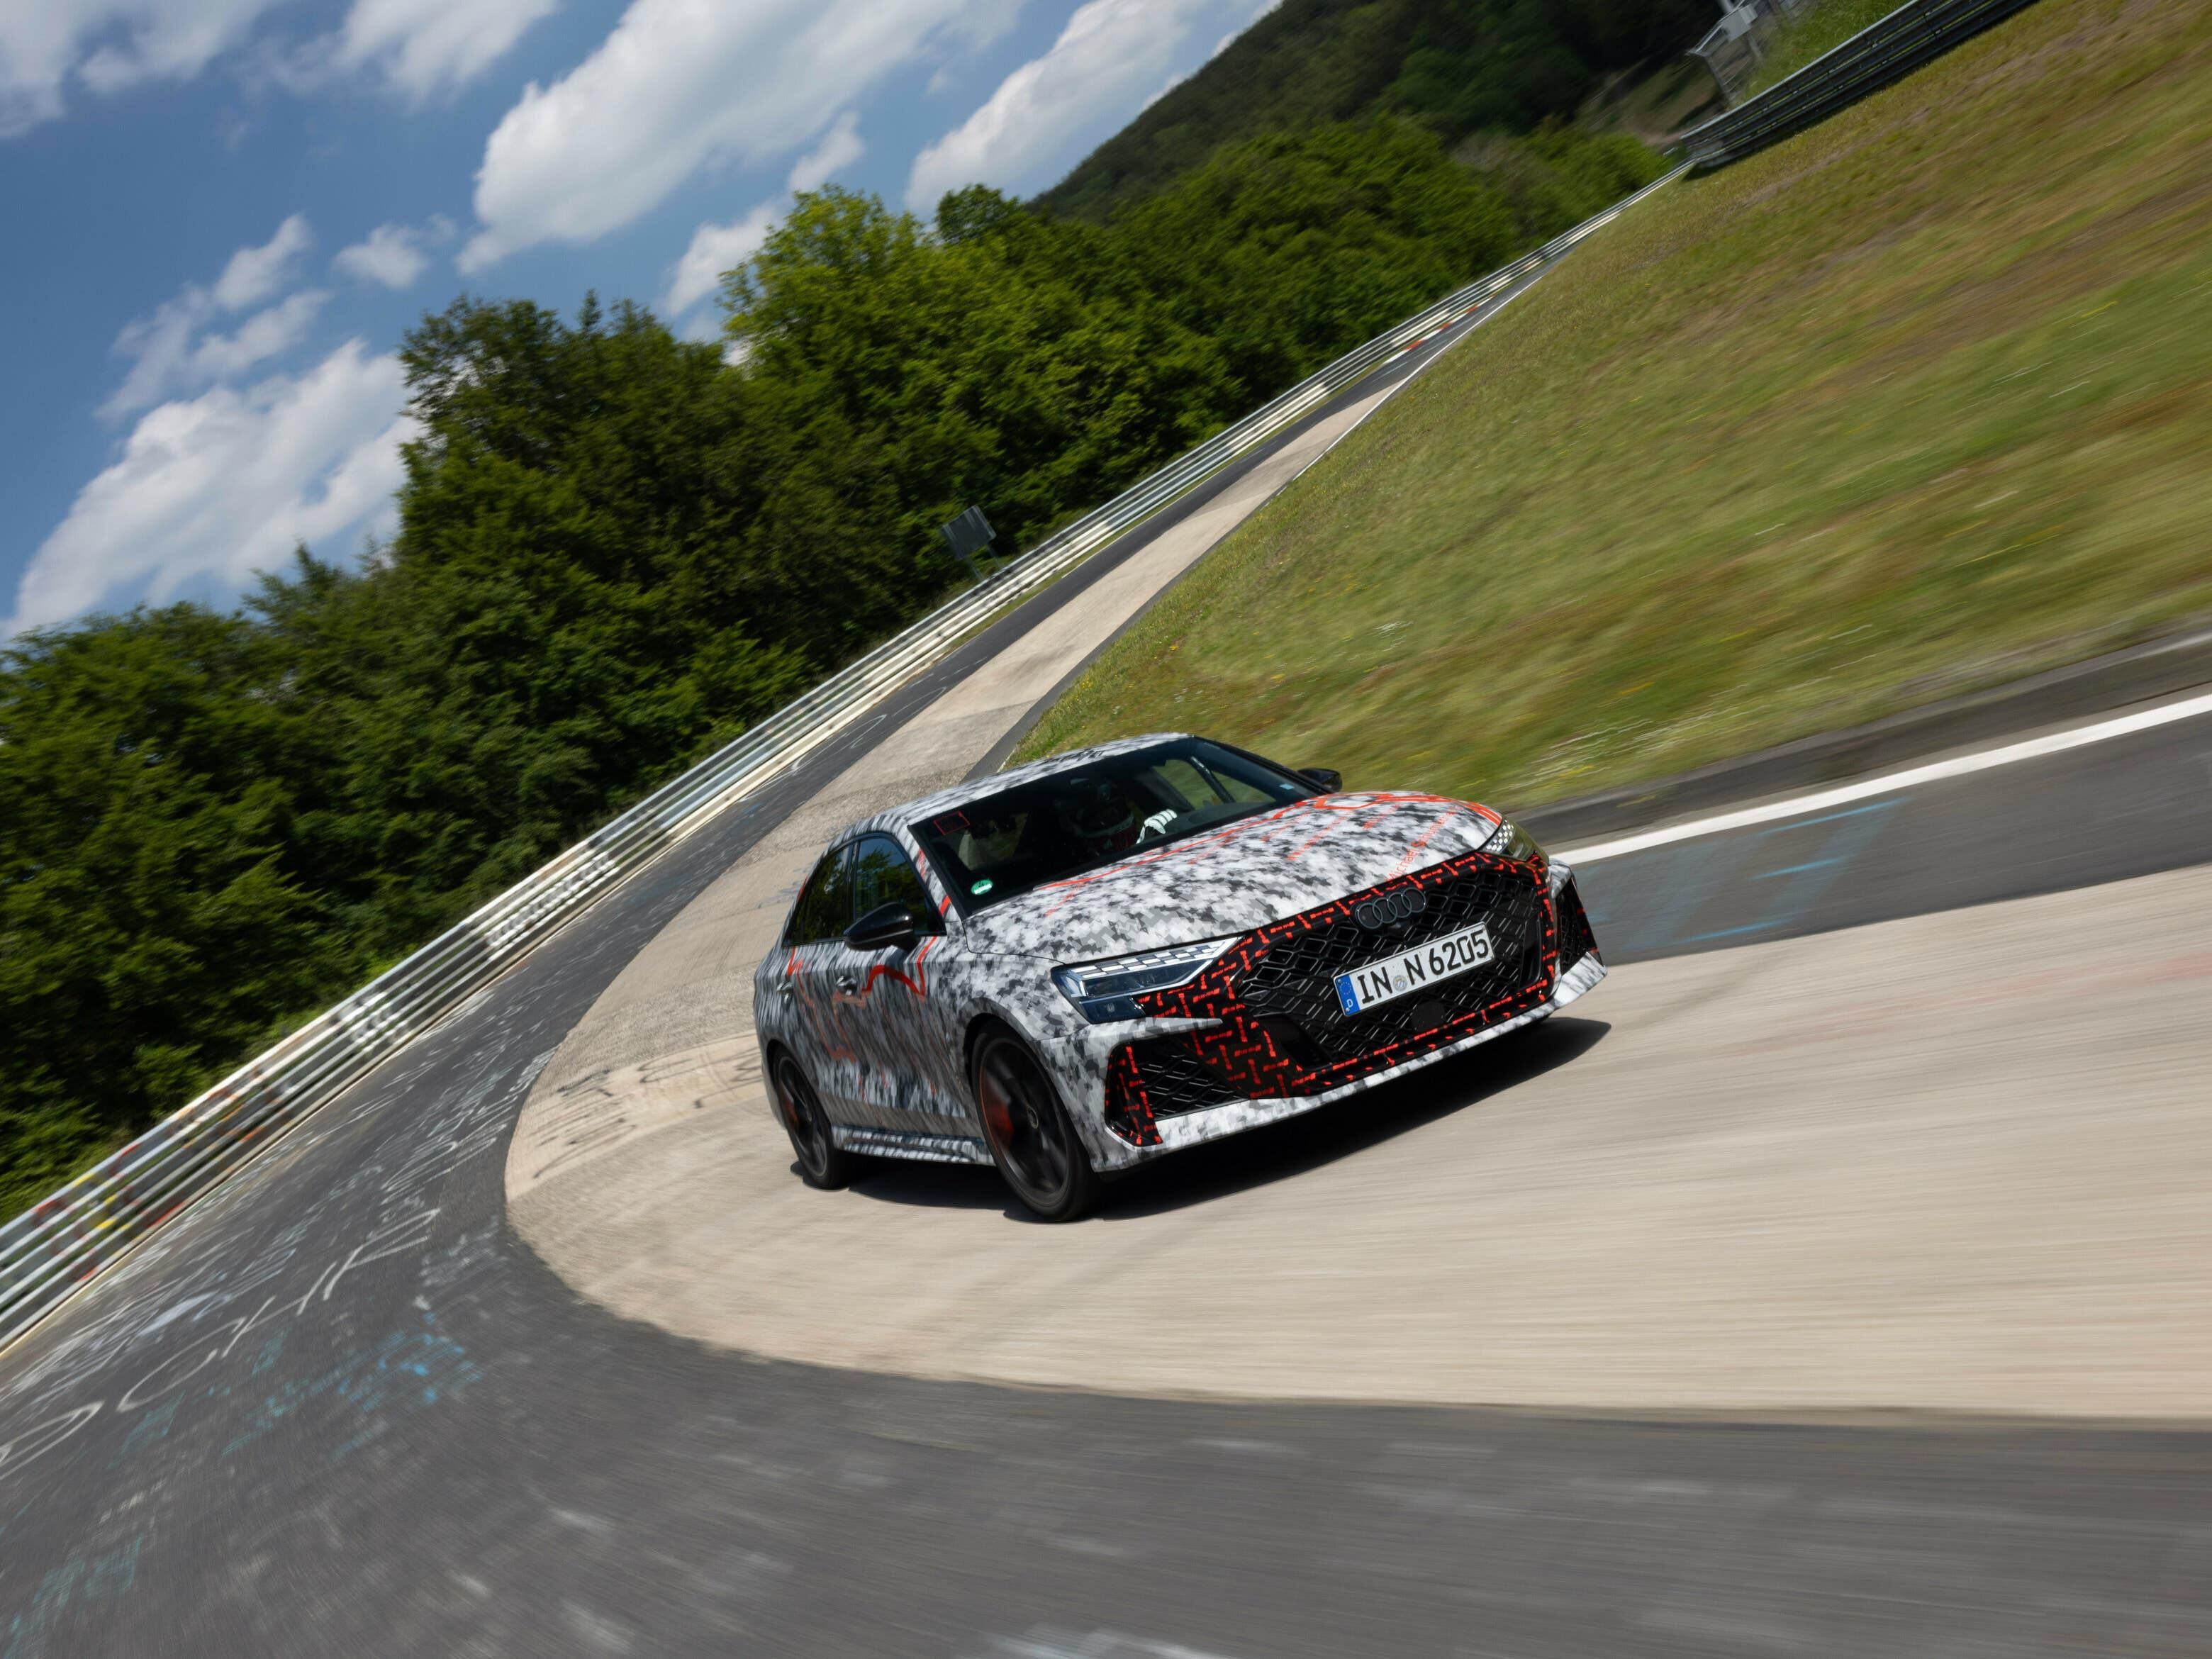 New Audi RS 3 sets lap record at the Nürburgring